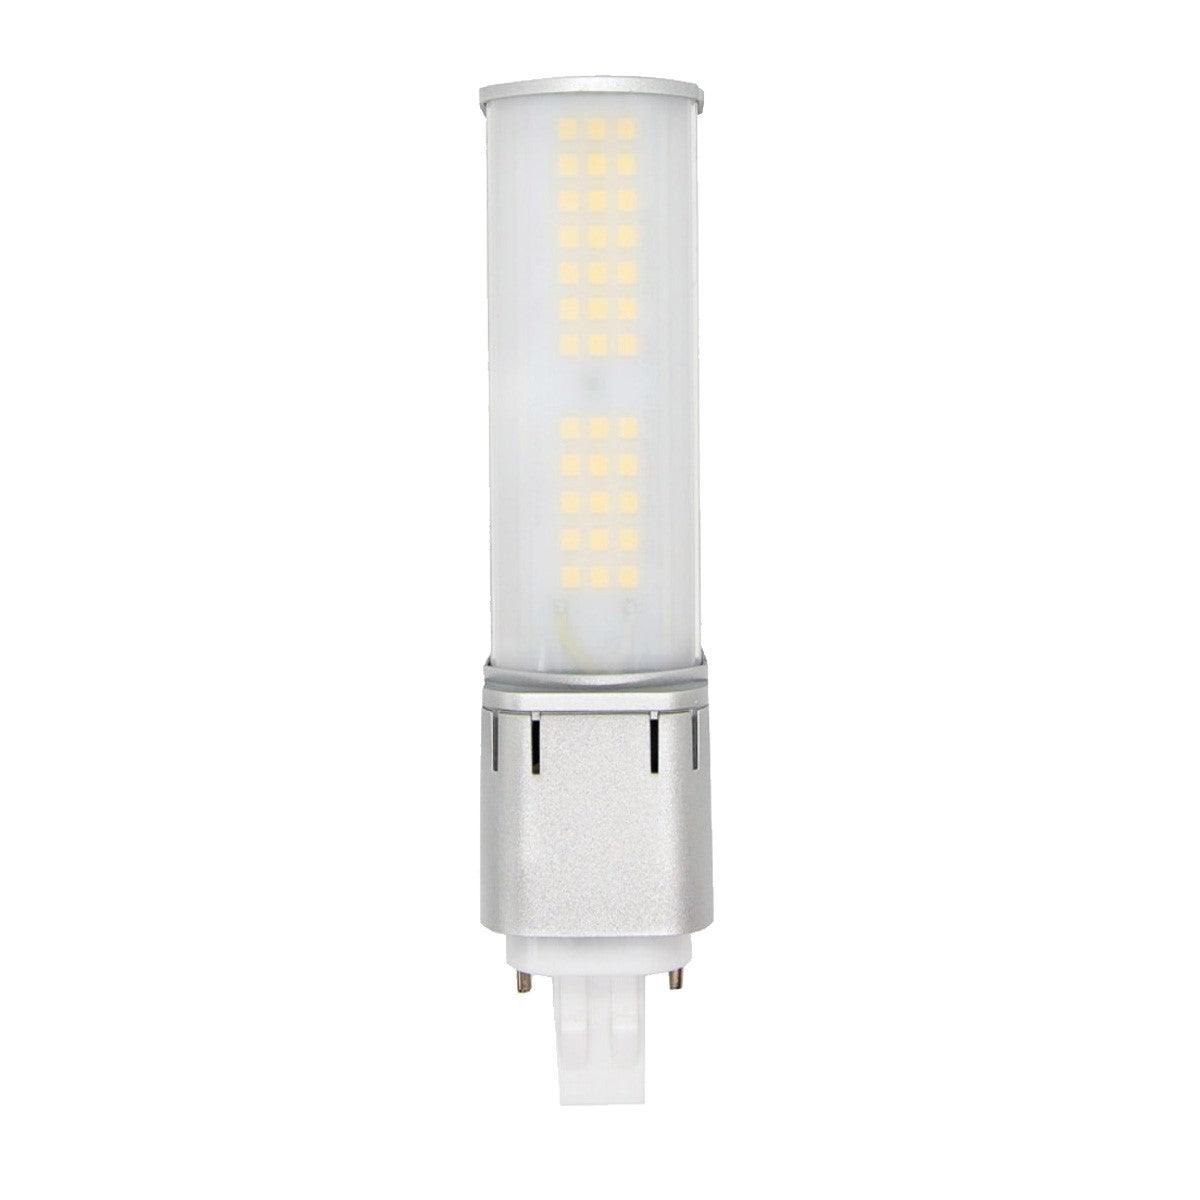 2 pin PL LED Bulb, 7 Watt 880 Lumens, 4000K, Horizontal, Replaces 13W CFL, GX23 Base-2, Direct Or Bypass